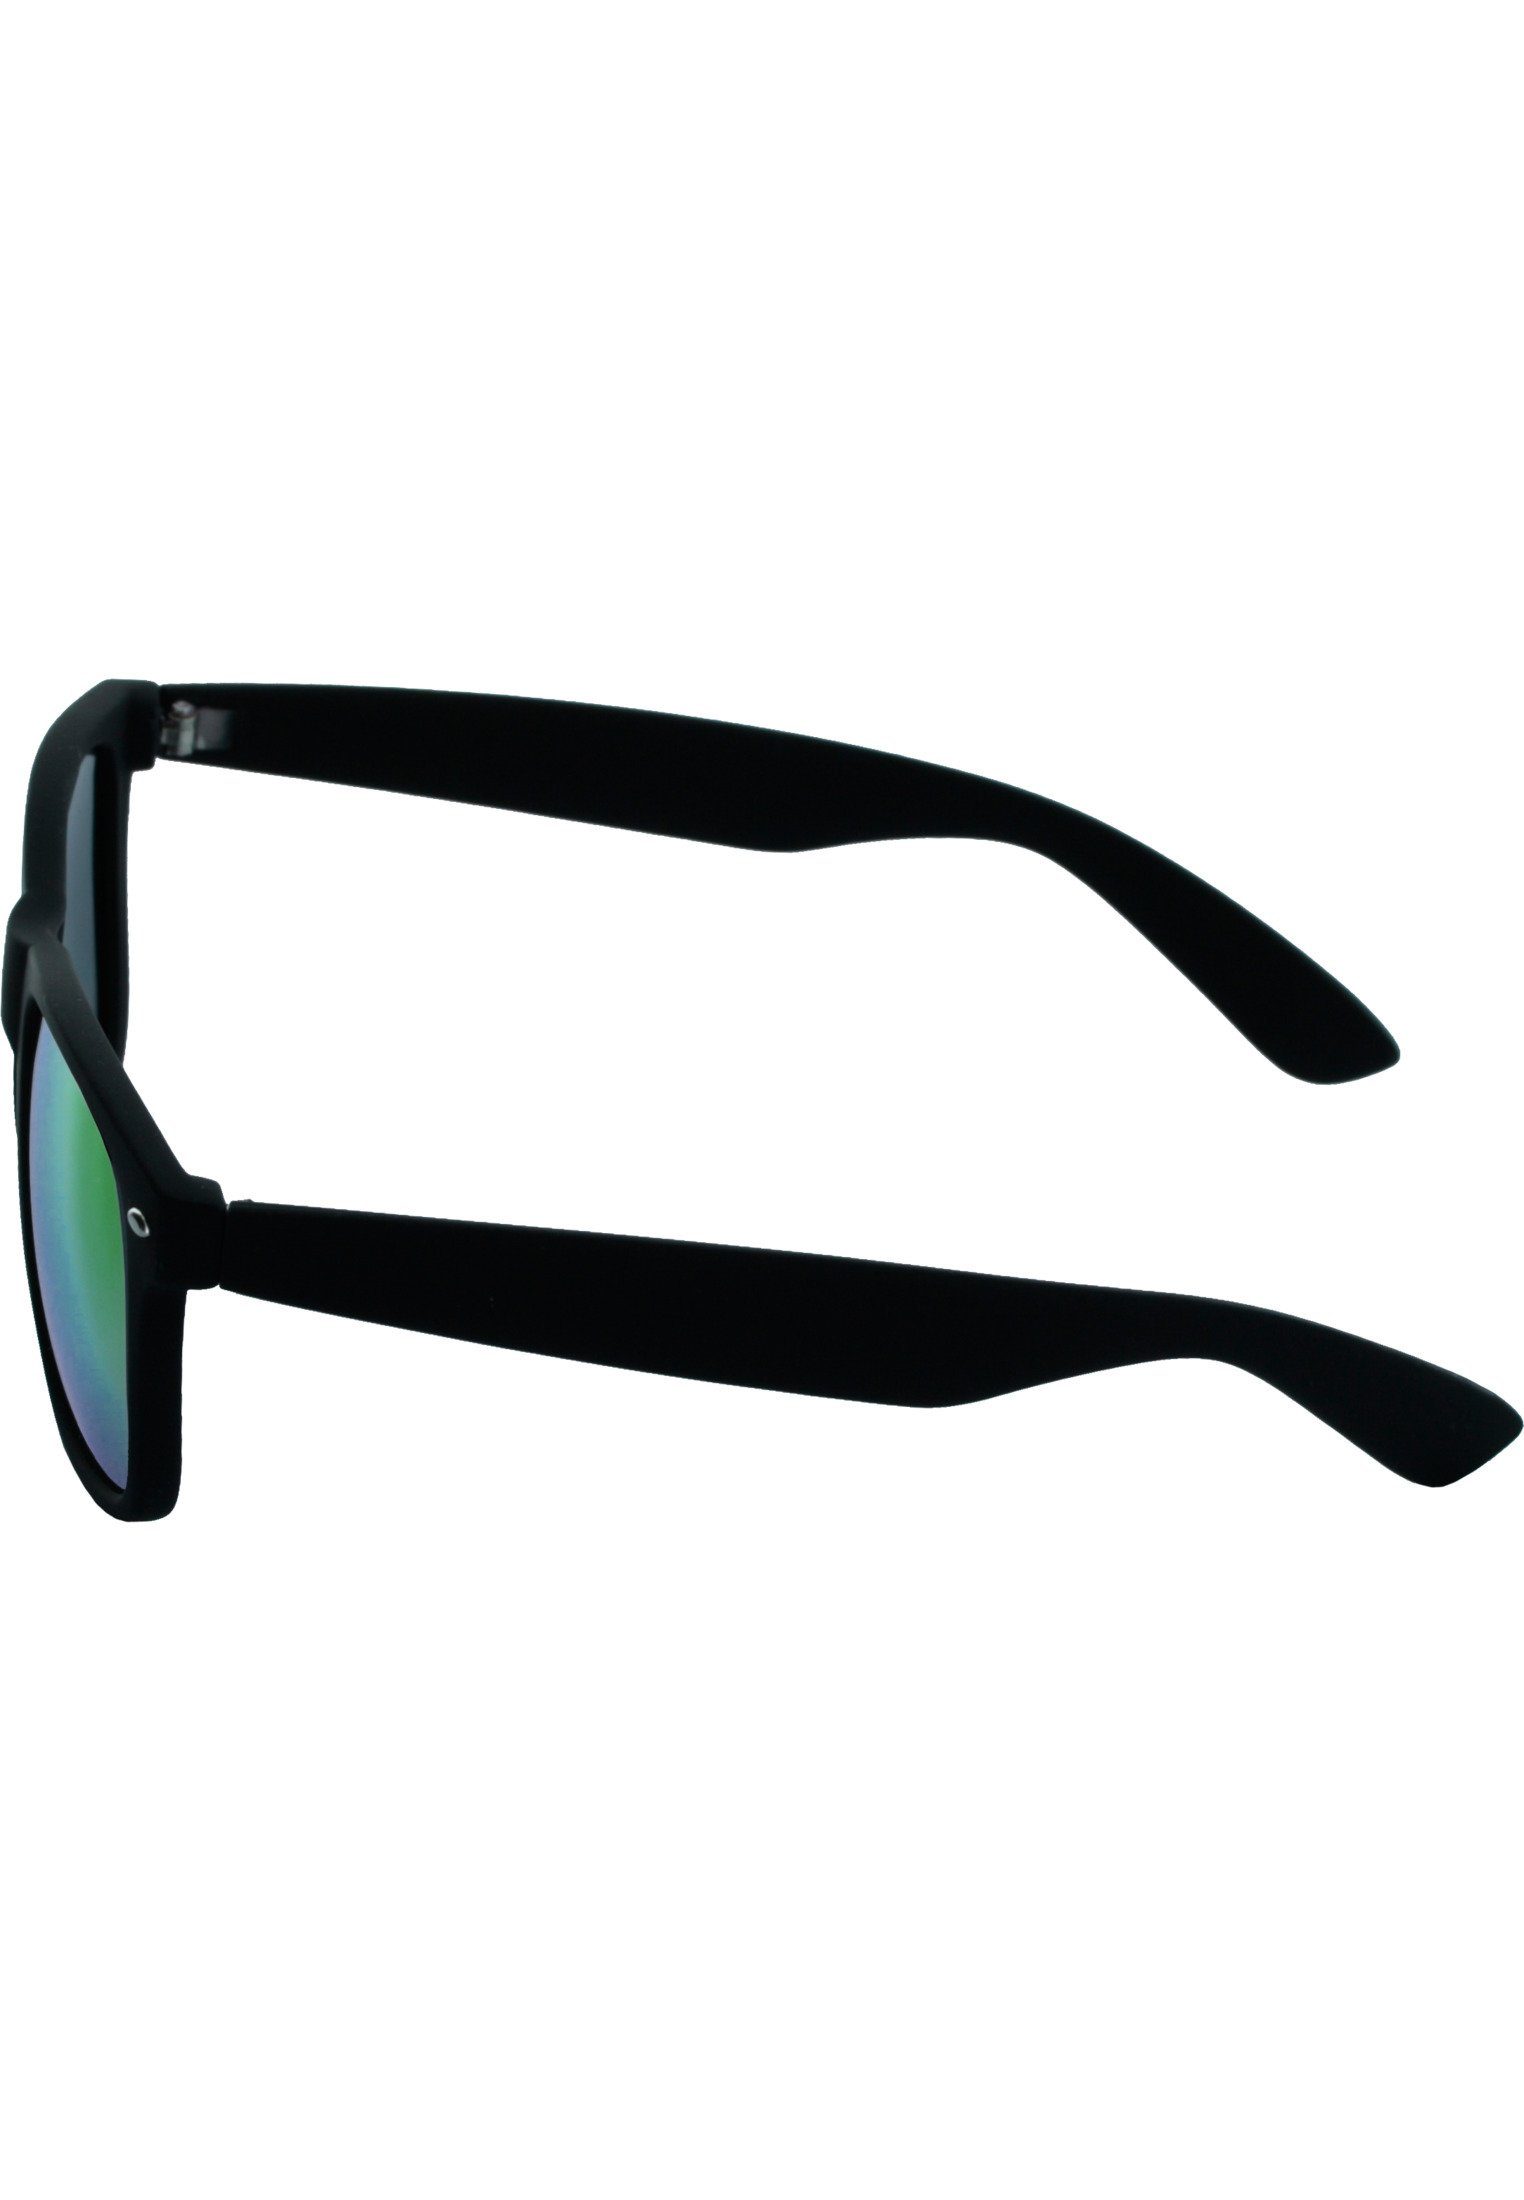 Accessoires MSTRDS Sunglasses Mirror Sonnenbrille Likoma blk/blue